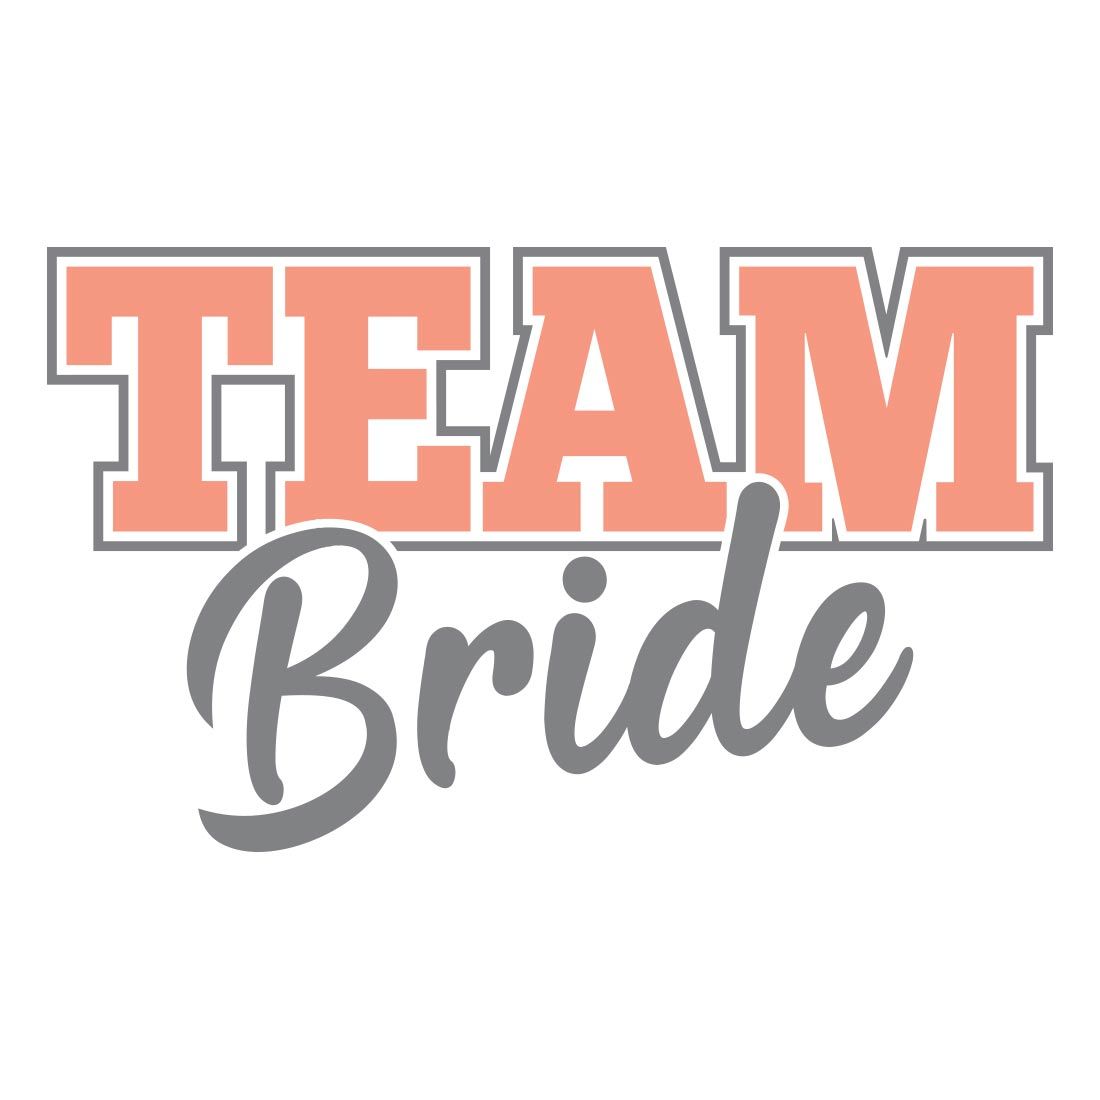 Team Bride, Bridesmaid, Bachelorette, Wedding, SVG, PNG